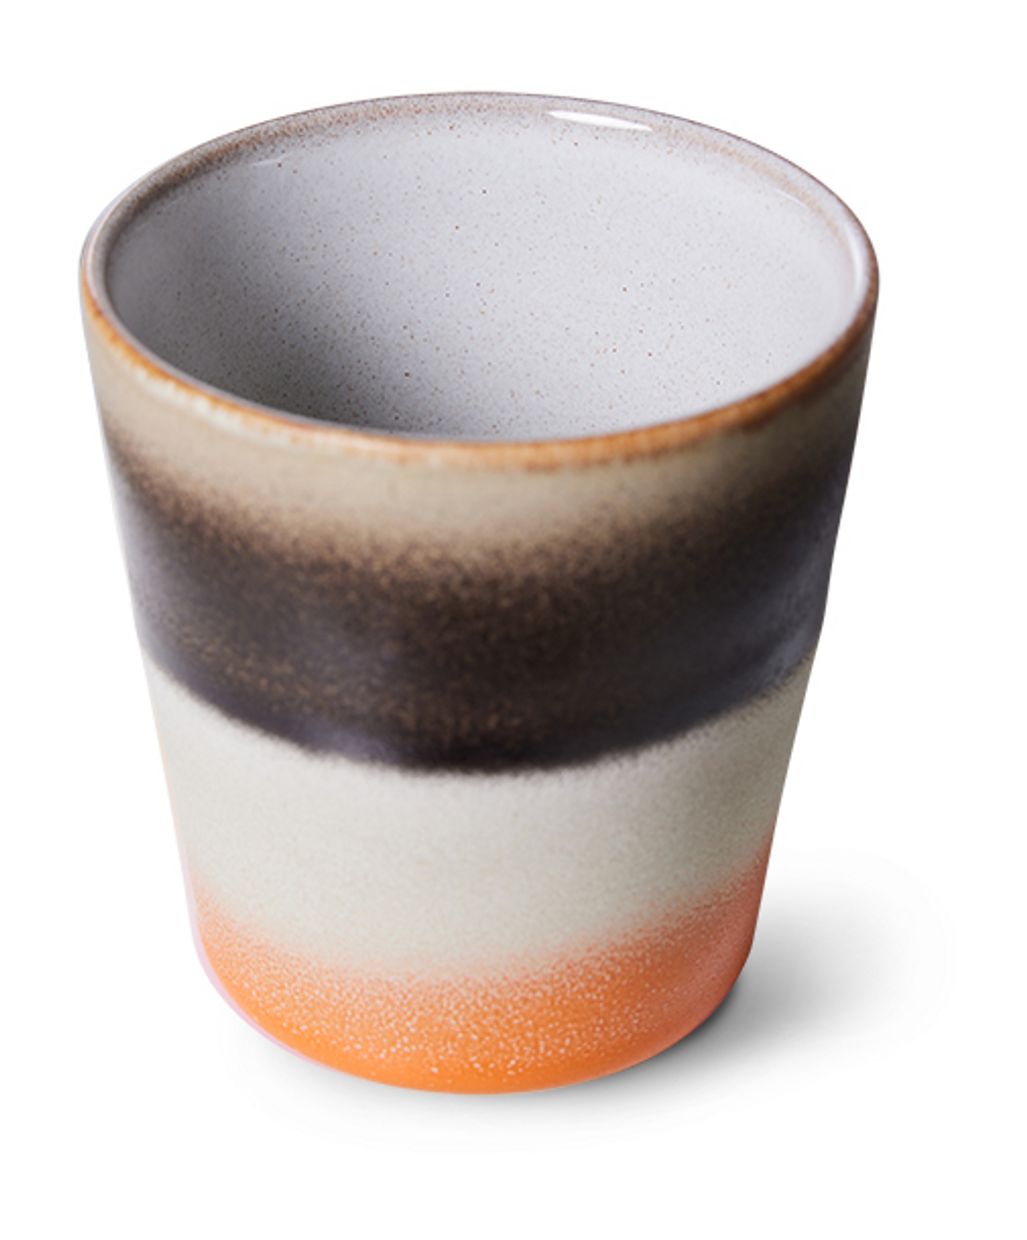 70s ceramics: coffee mug, Bomb